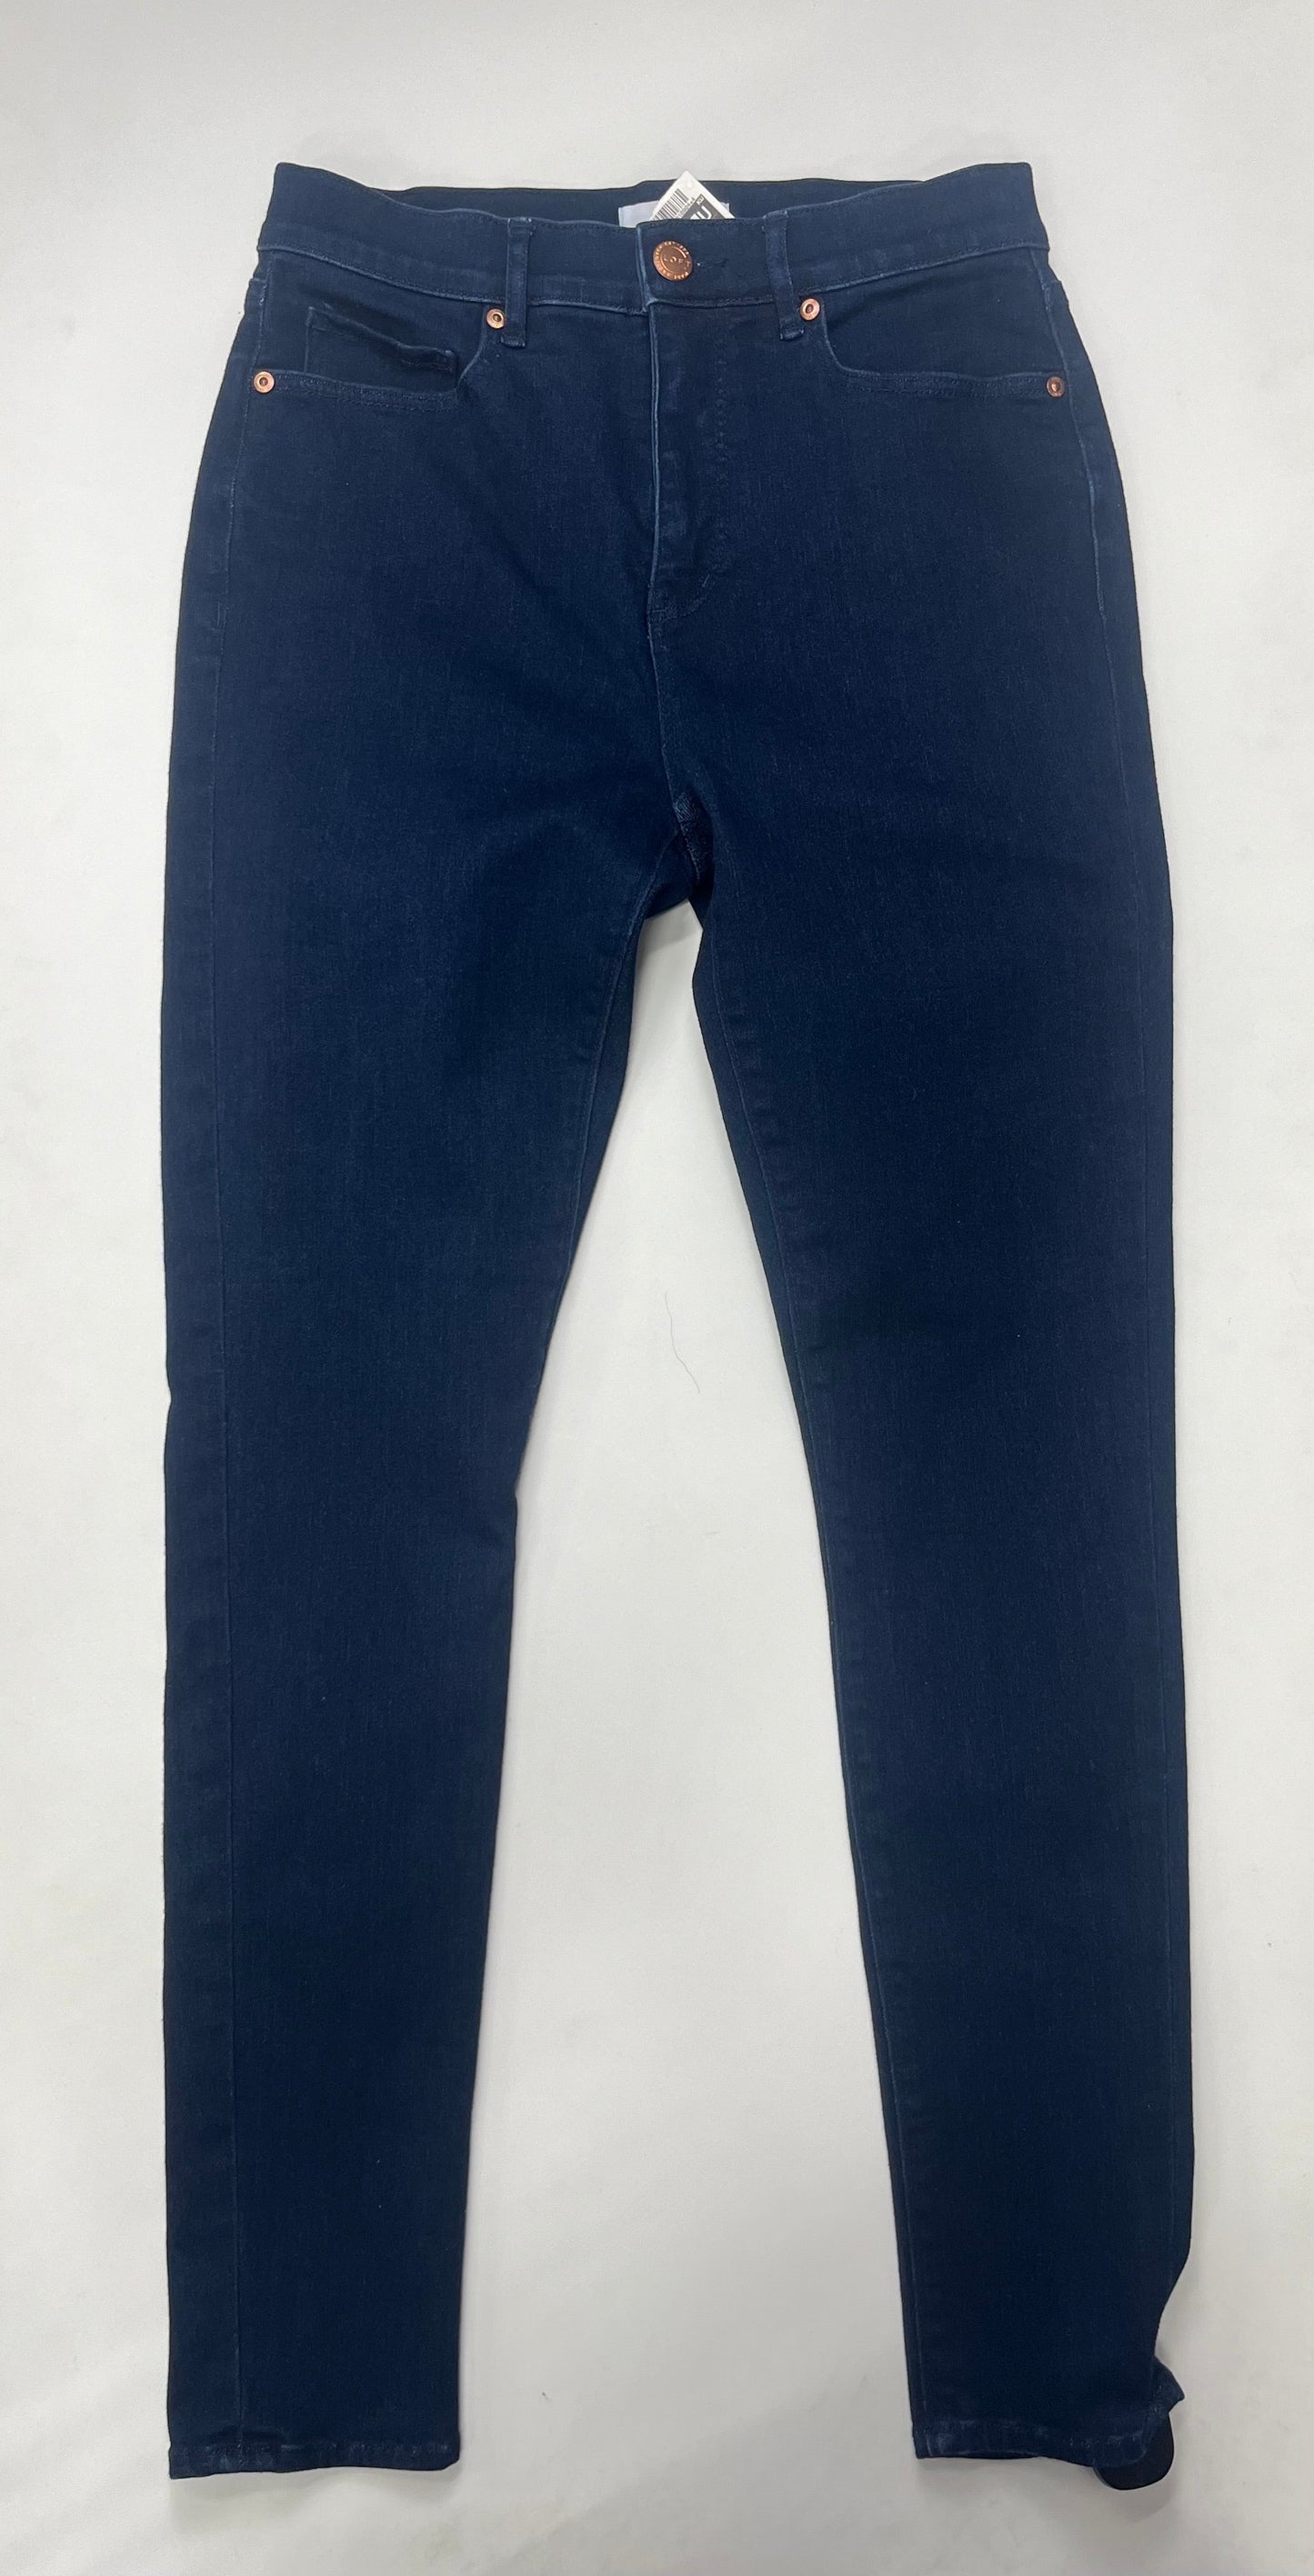 Jeans By Ann Taylor Loft  Size: 4